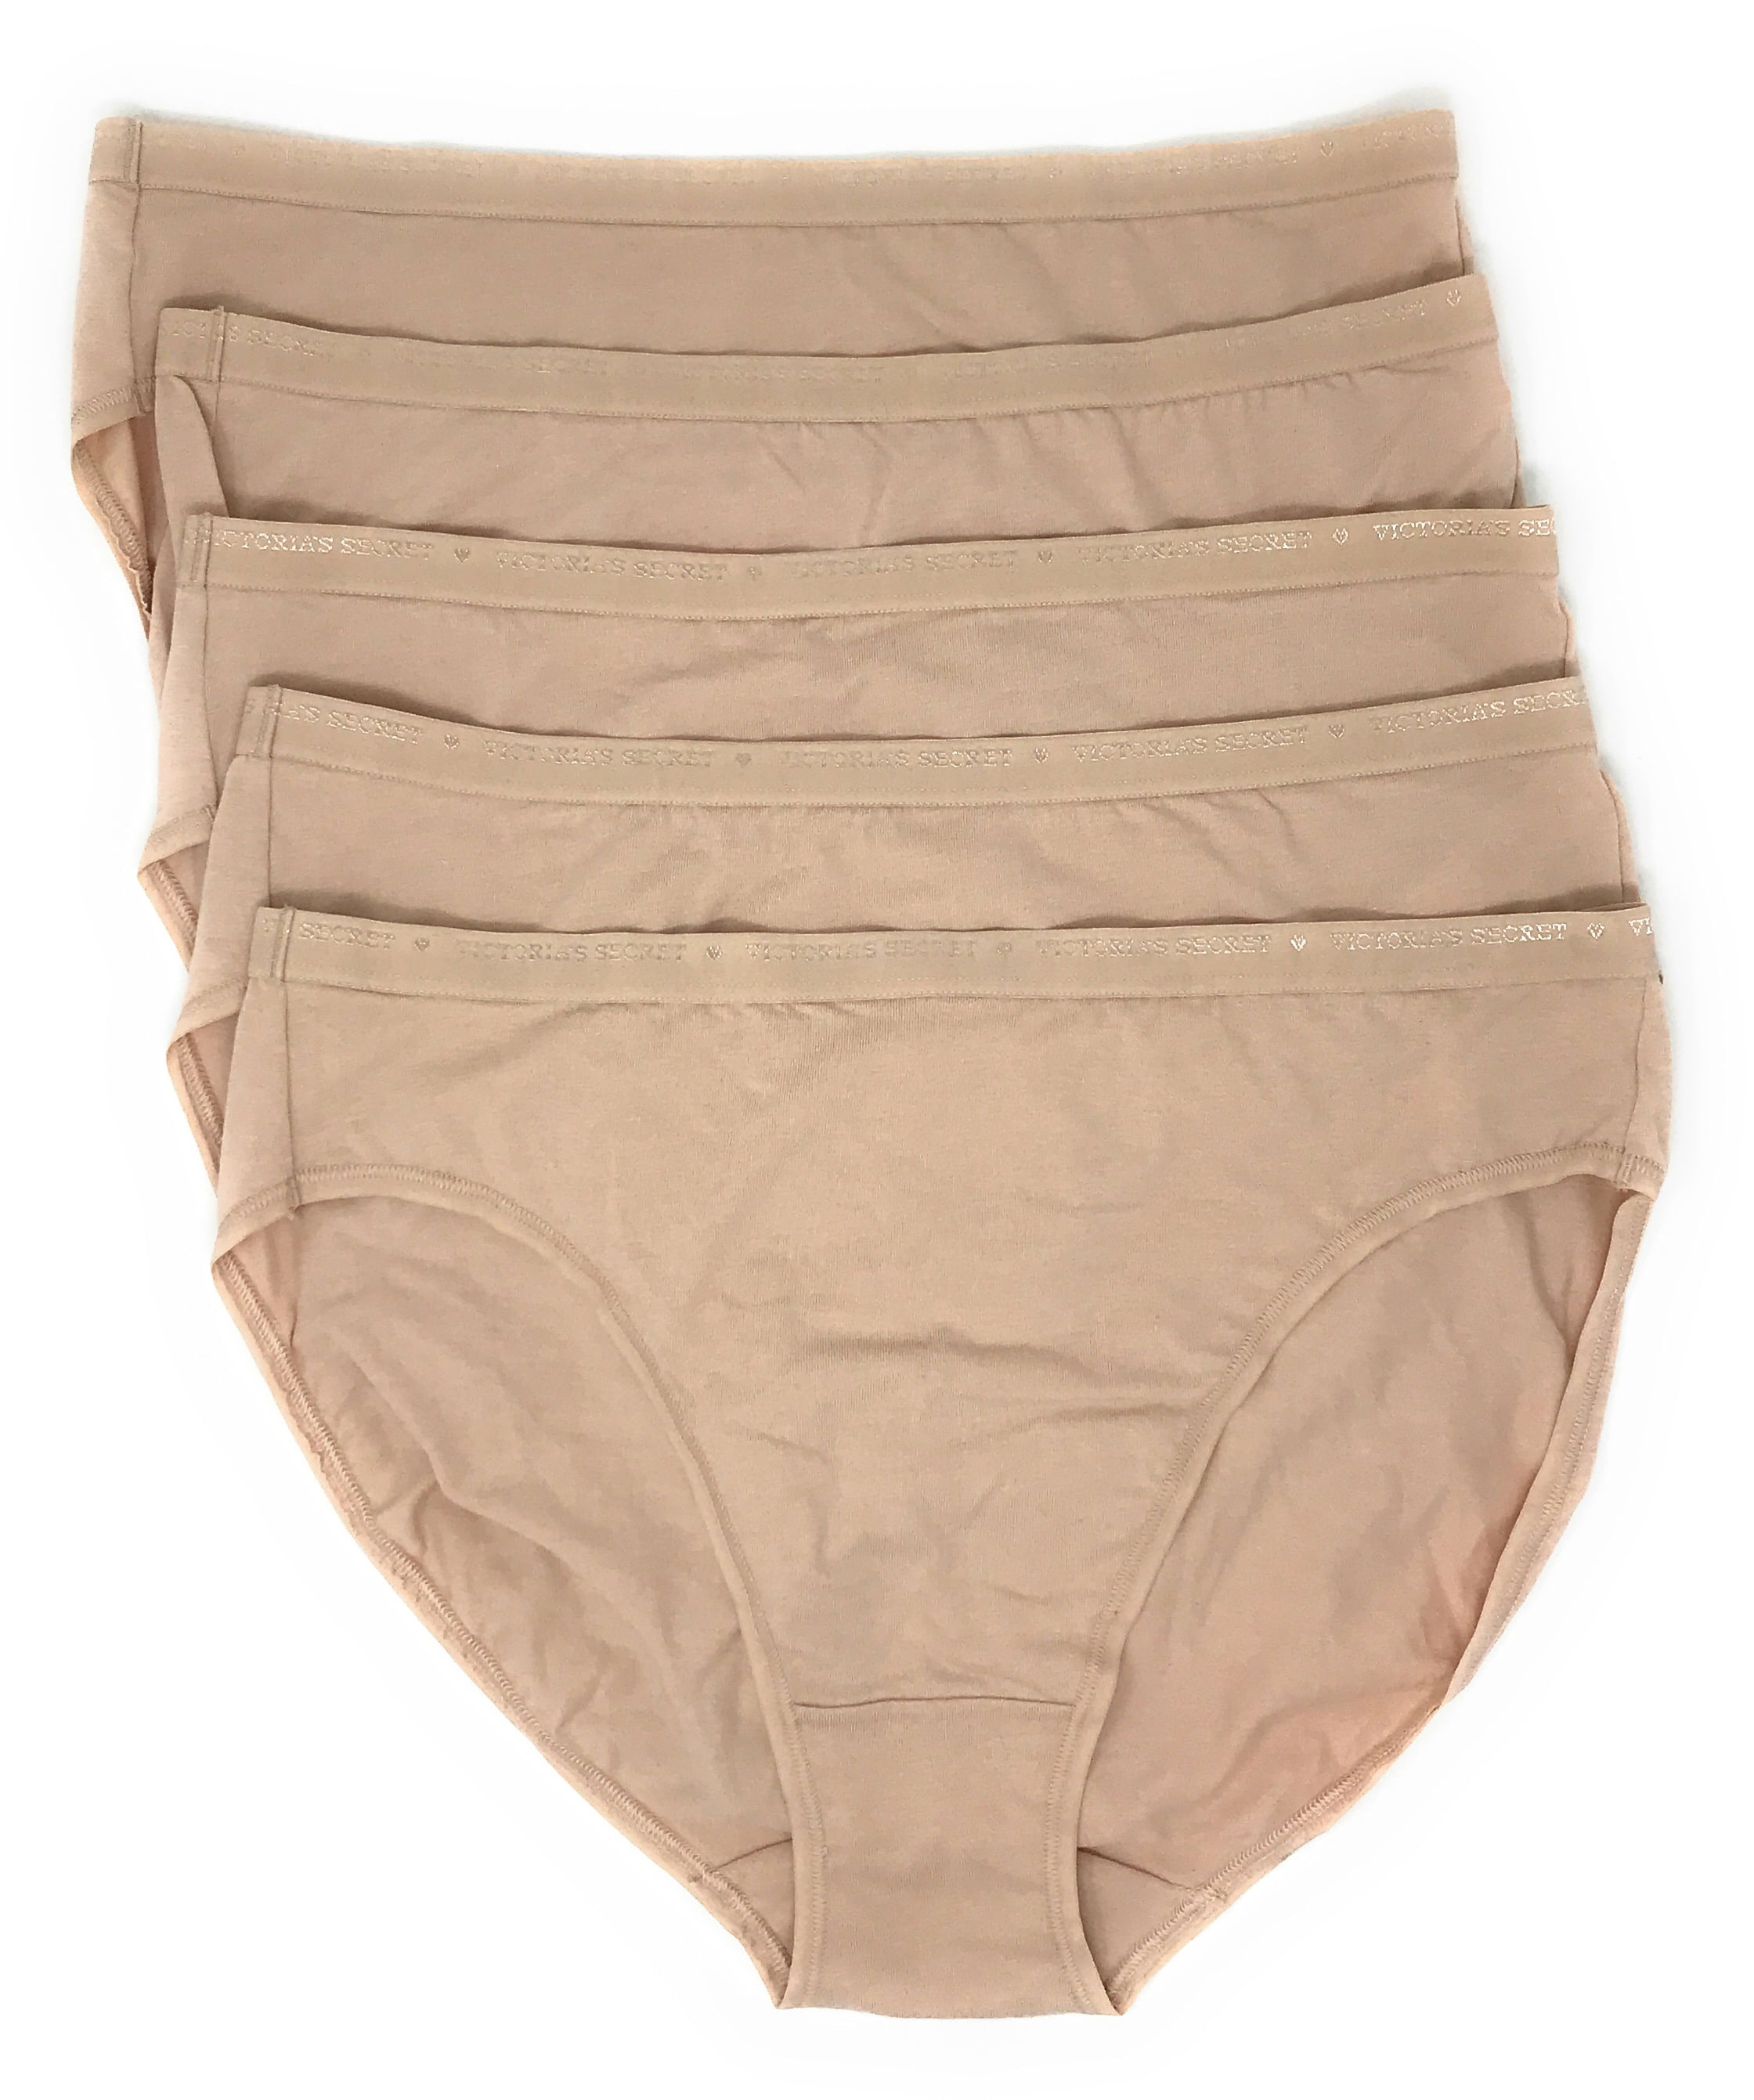 Victoria S Secret High Leg Brief Panty Set Of Walmart